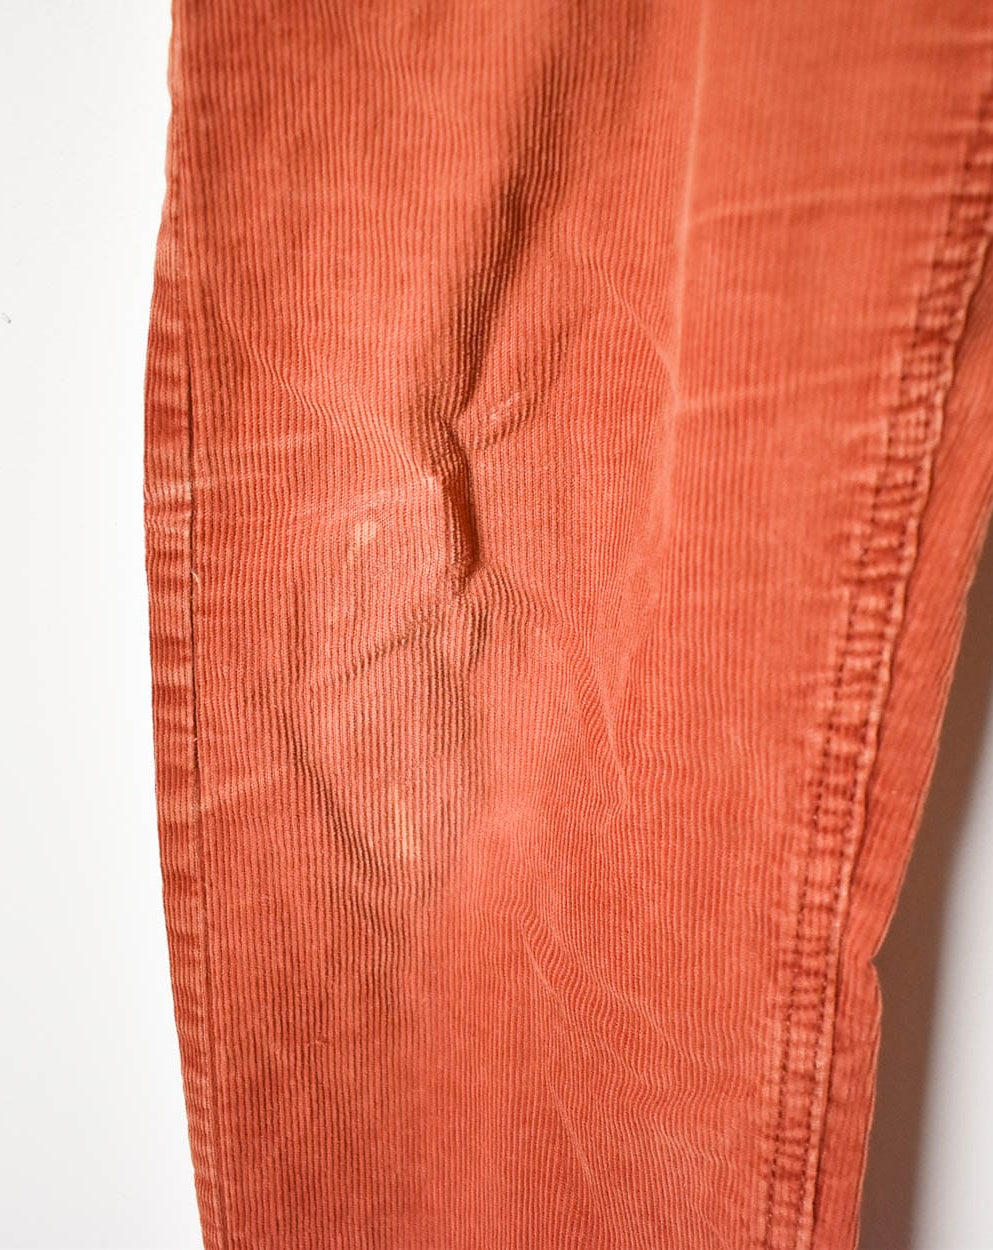 Orange Lee Cordoroy Jeans - W36 L32